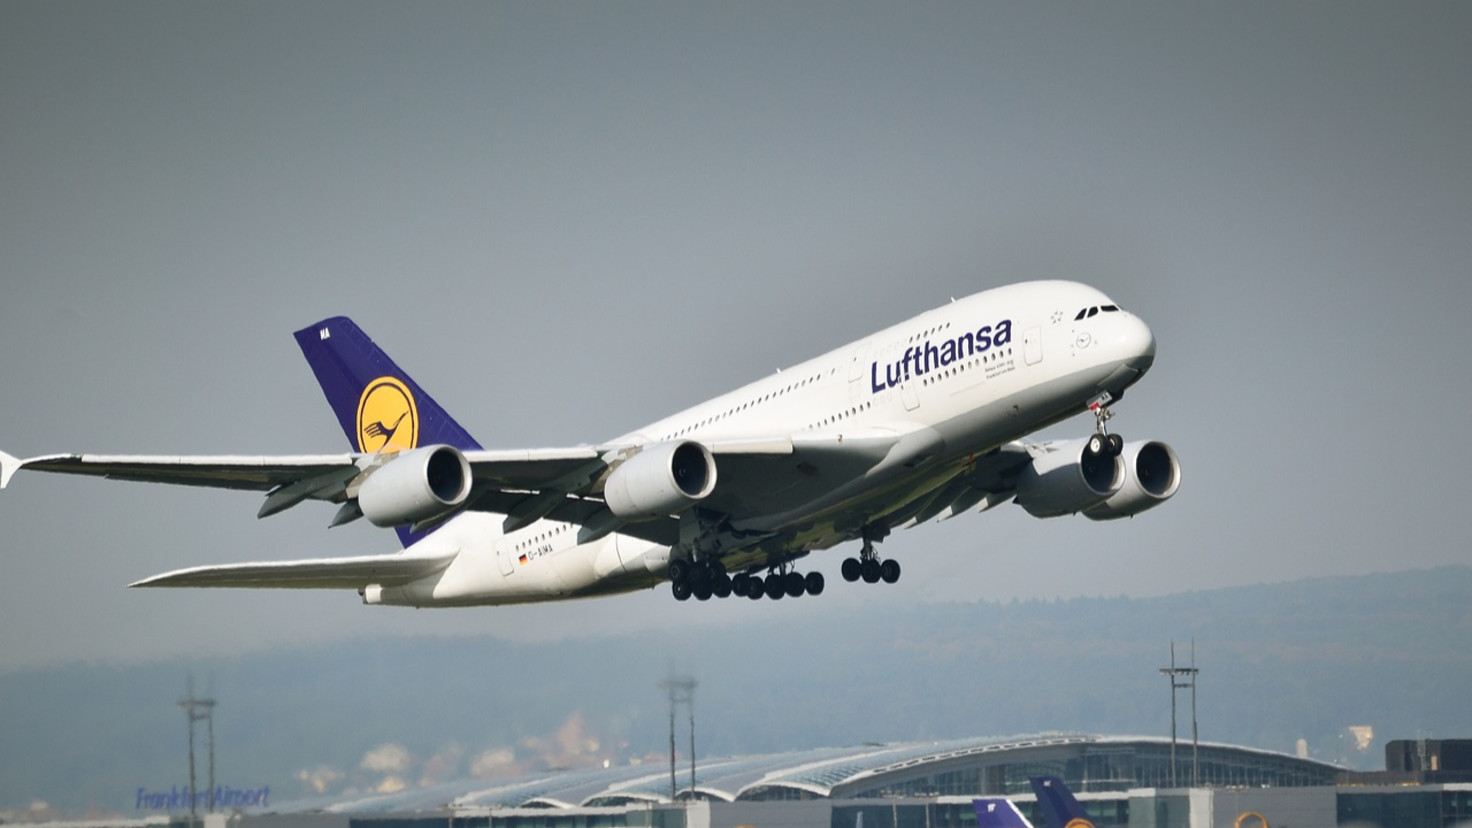 European Airline Stocks Shaken as Lufthansa Cuts 2019 Profit Forecast